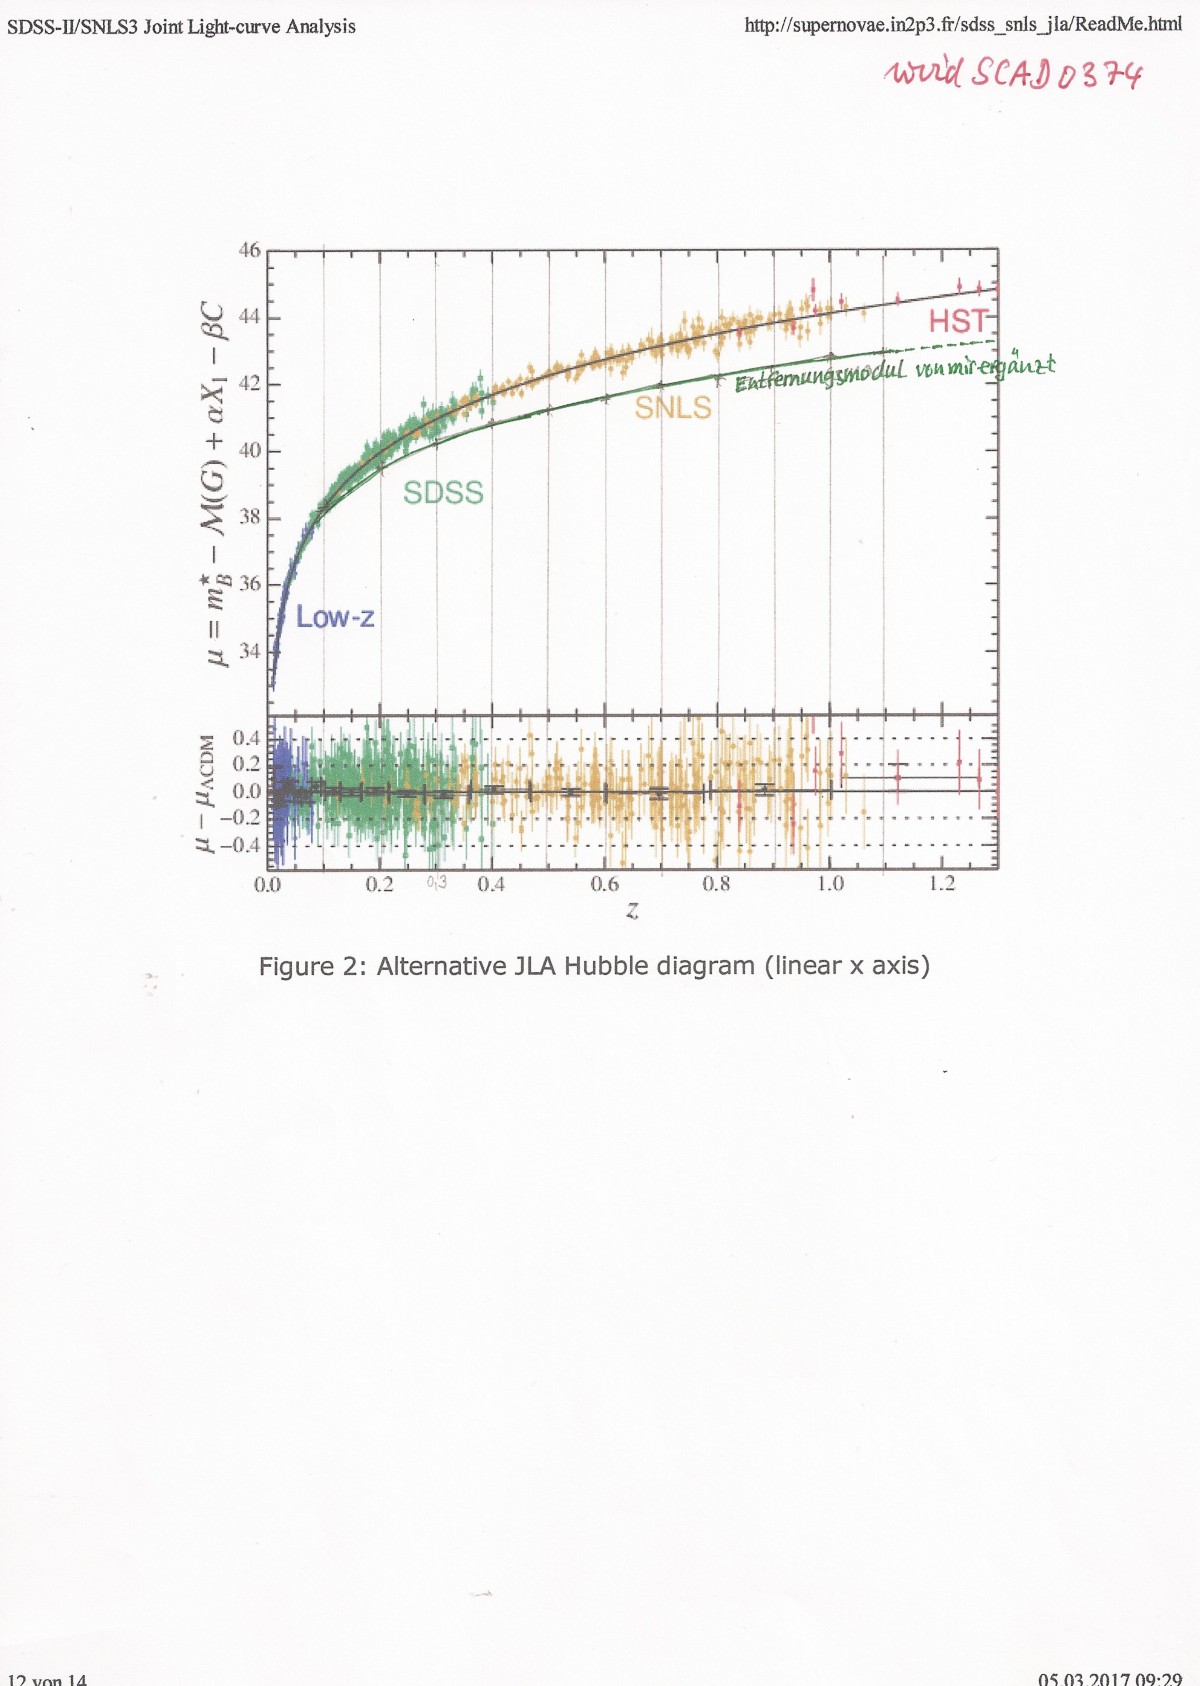 Fig2: Alternative JLA Hubble diagram (linear axis)